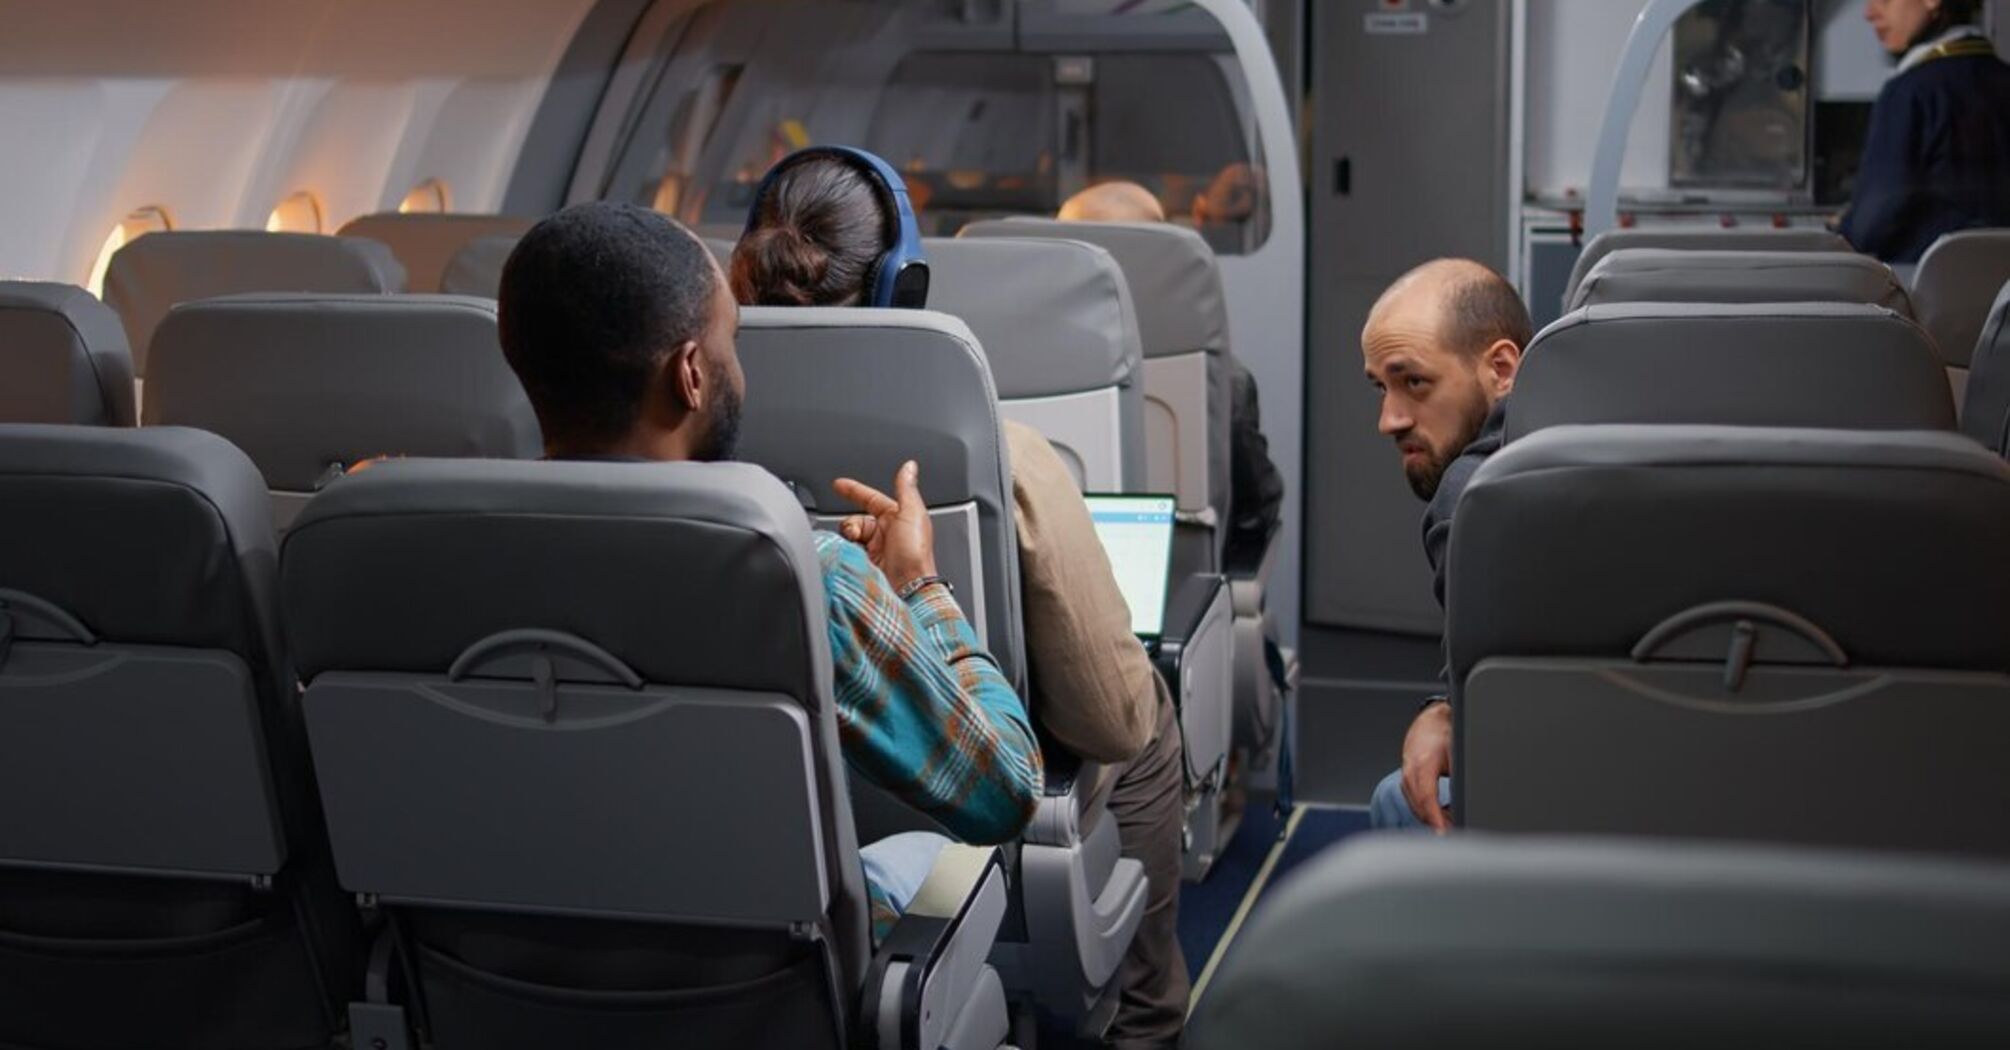 "Don't sleep on the plane, eat a banana, and do some exercises": flight attendant tips on overcoming jet lag